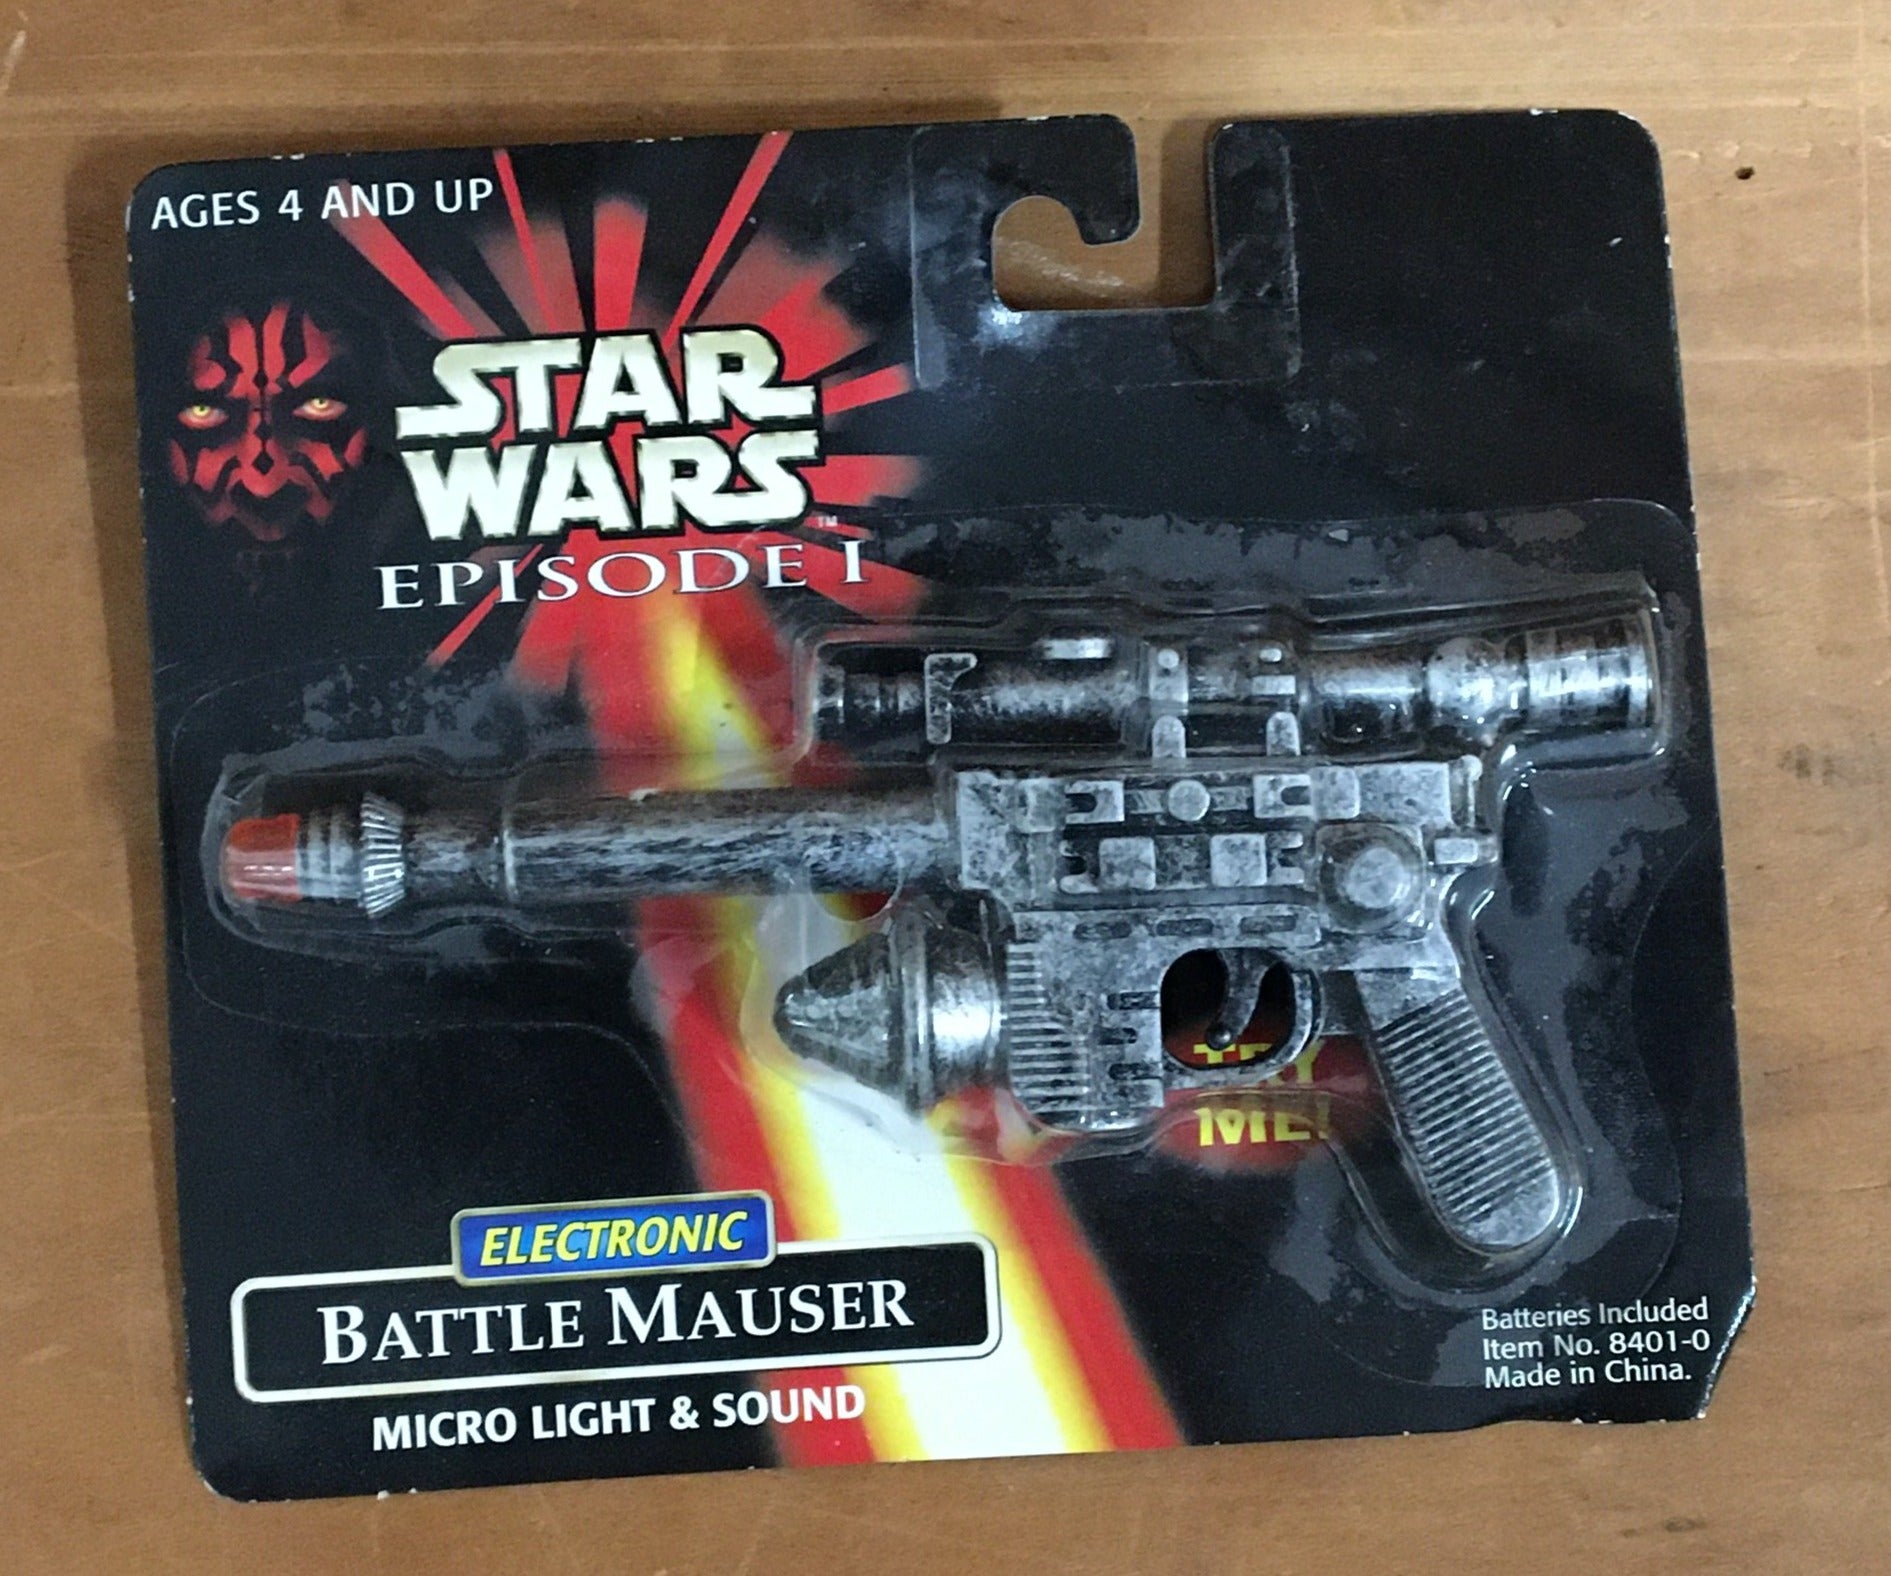 Star Wars Episode I Electronic Battle Mauser